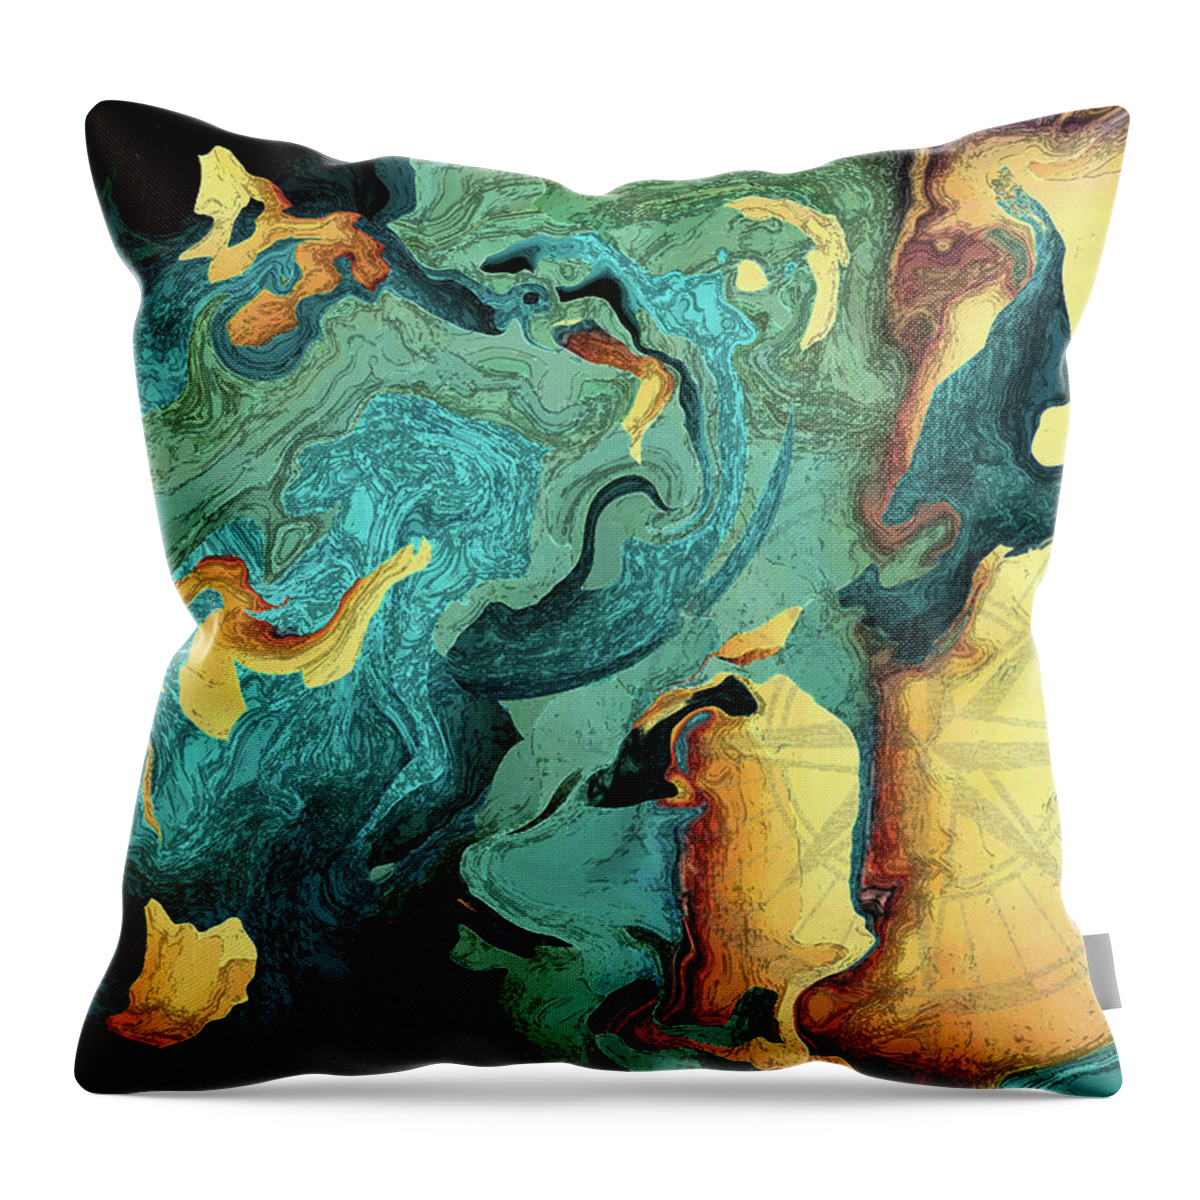 Aqua Throw Pillow featuring the painting Archipelago by Deborah Smith